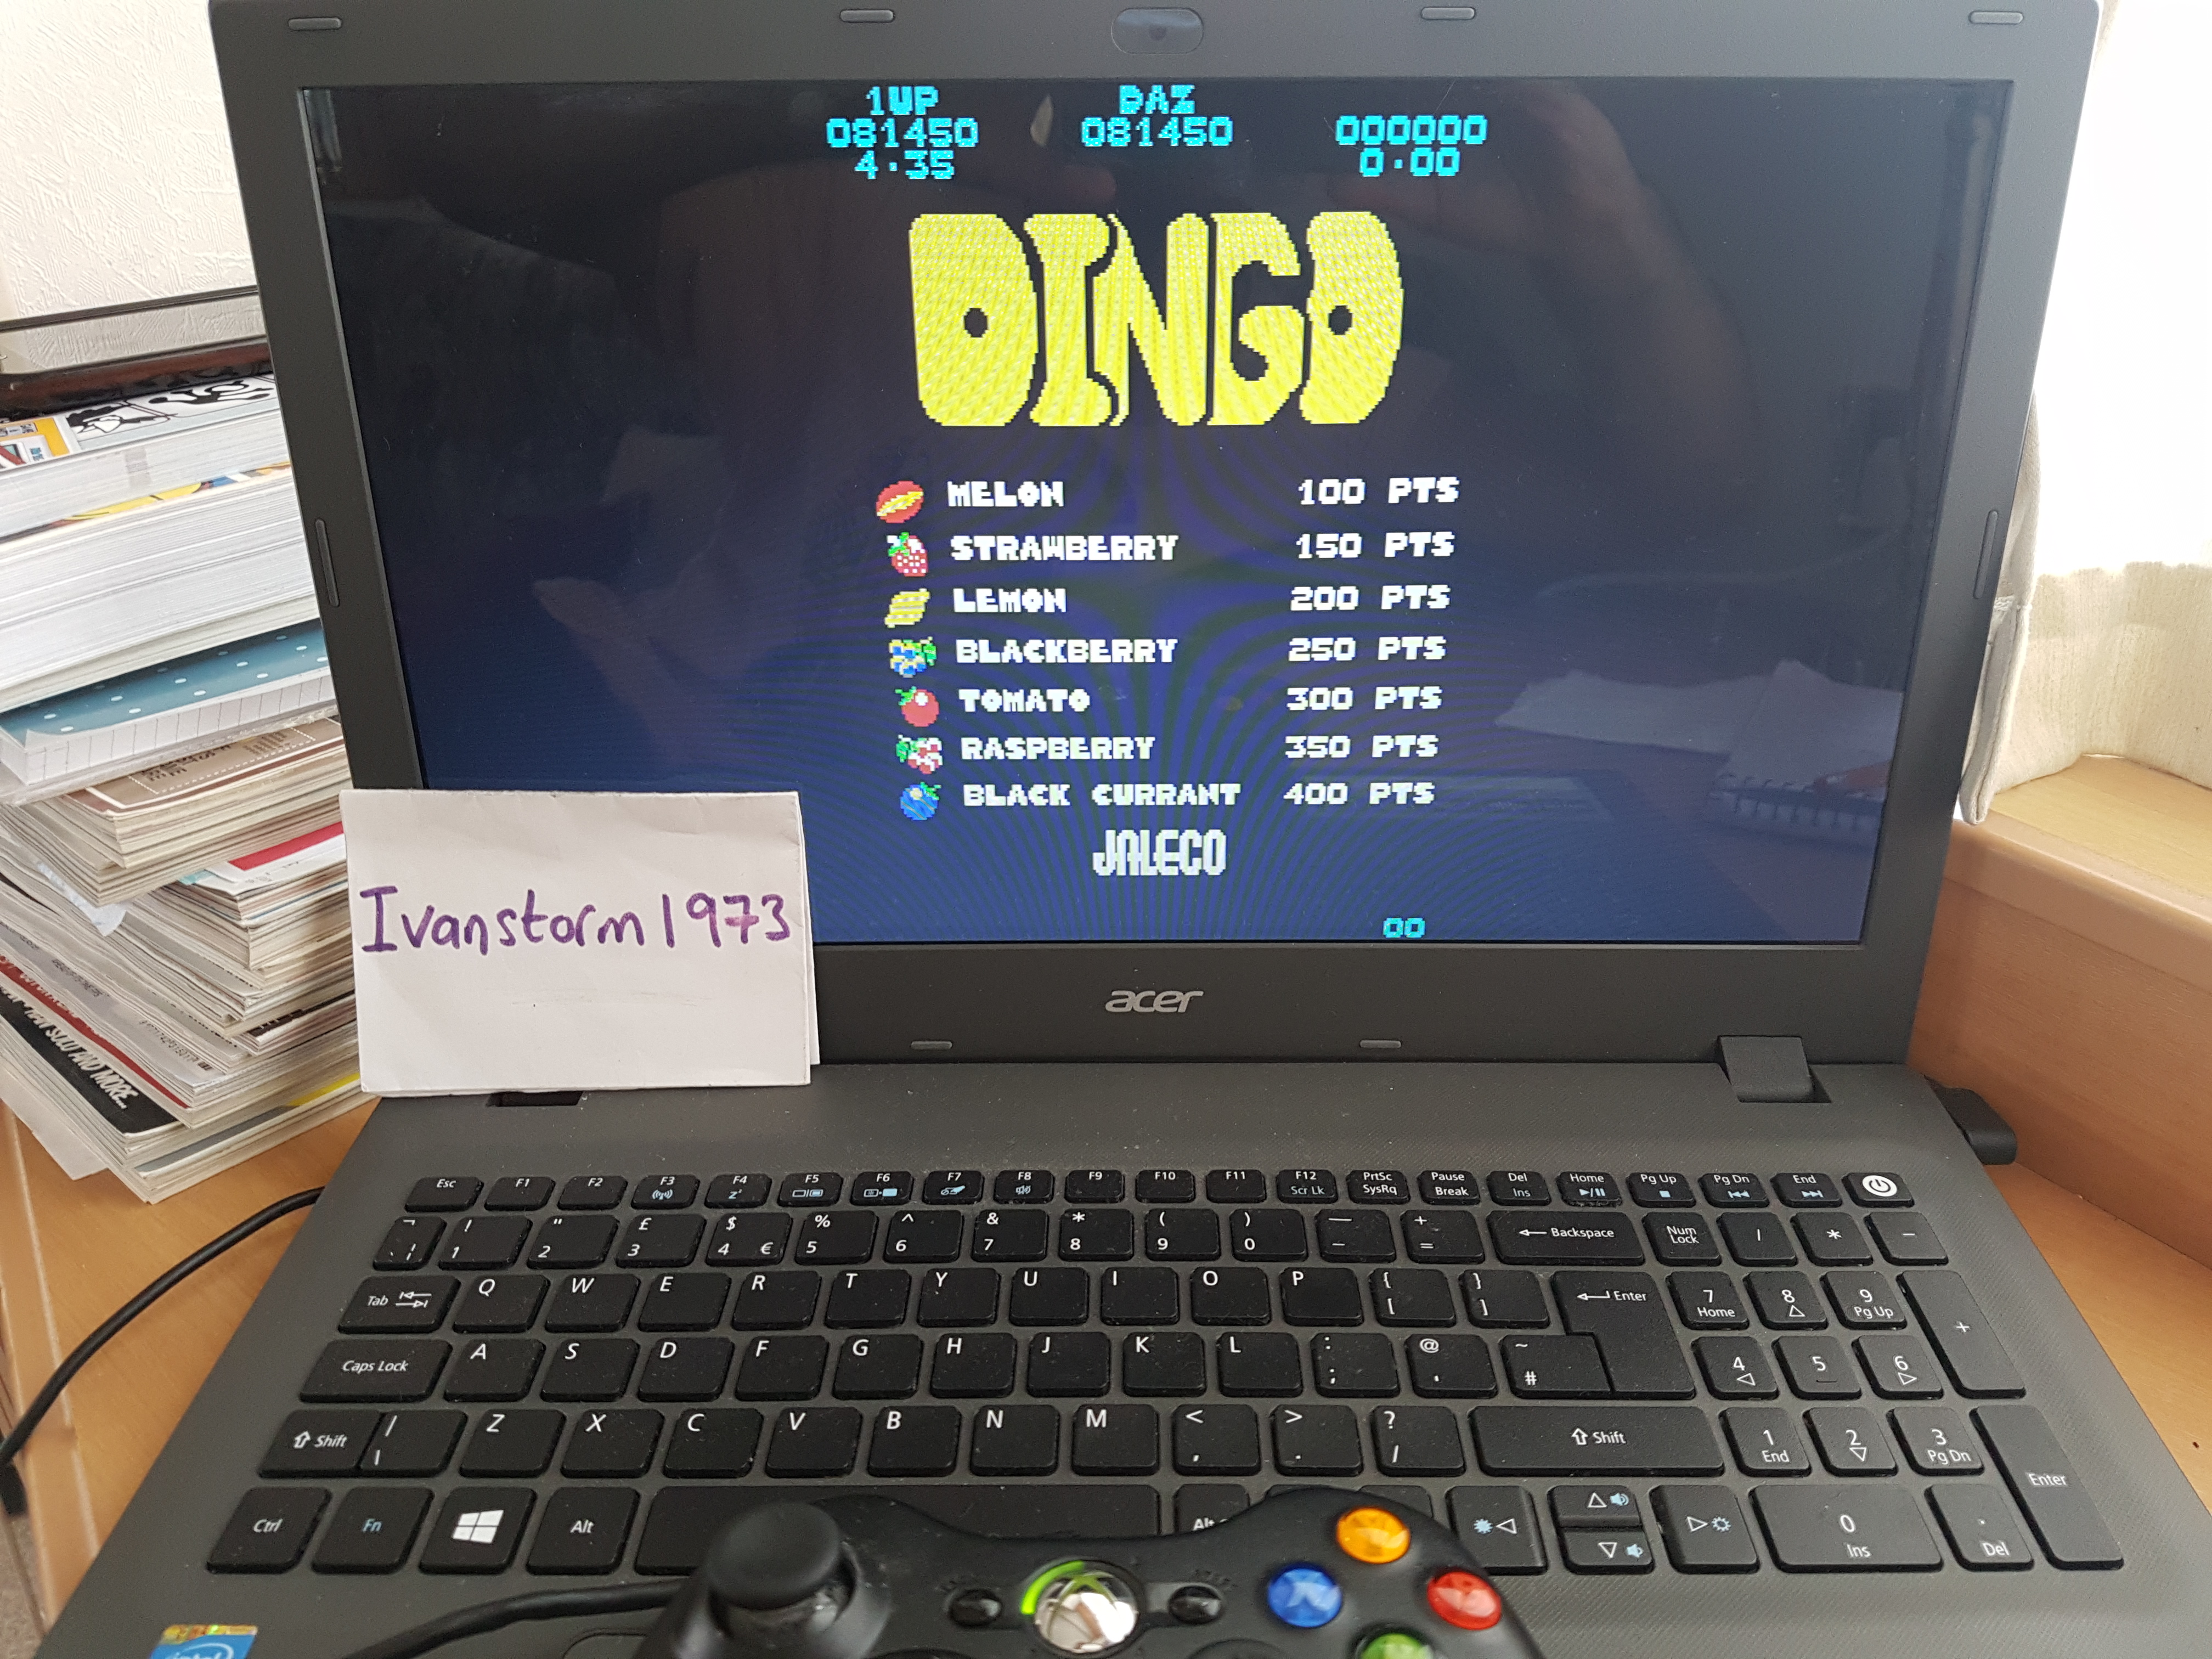 Ivanstorm1973: Dingo [dingo] (Arcade Emulated / M.A.M.E.) 81,450 points on 2017-08-14 04:58:05